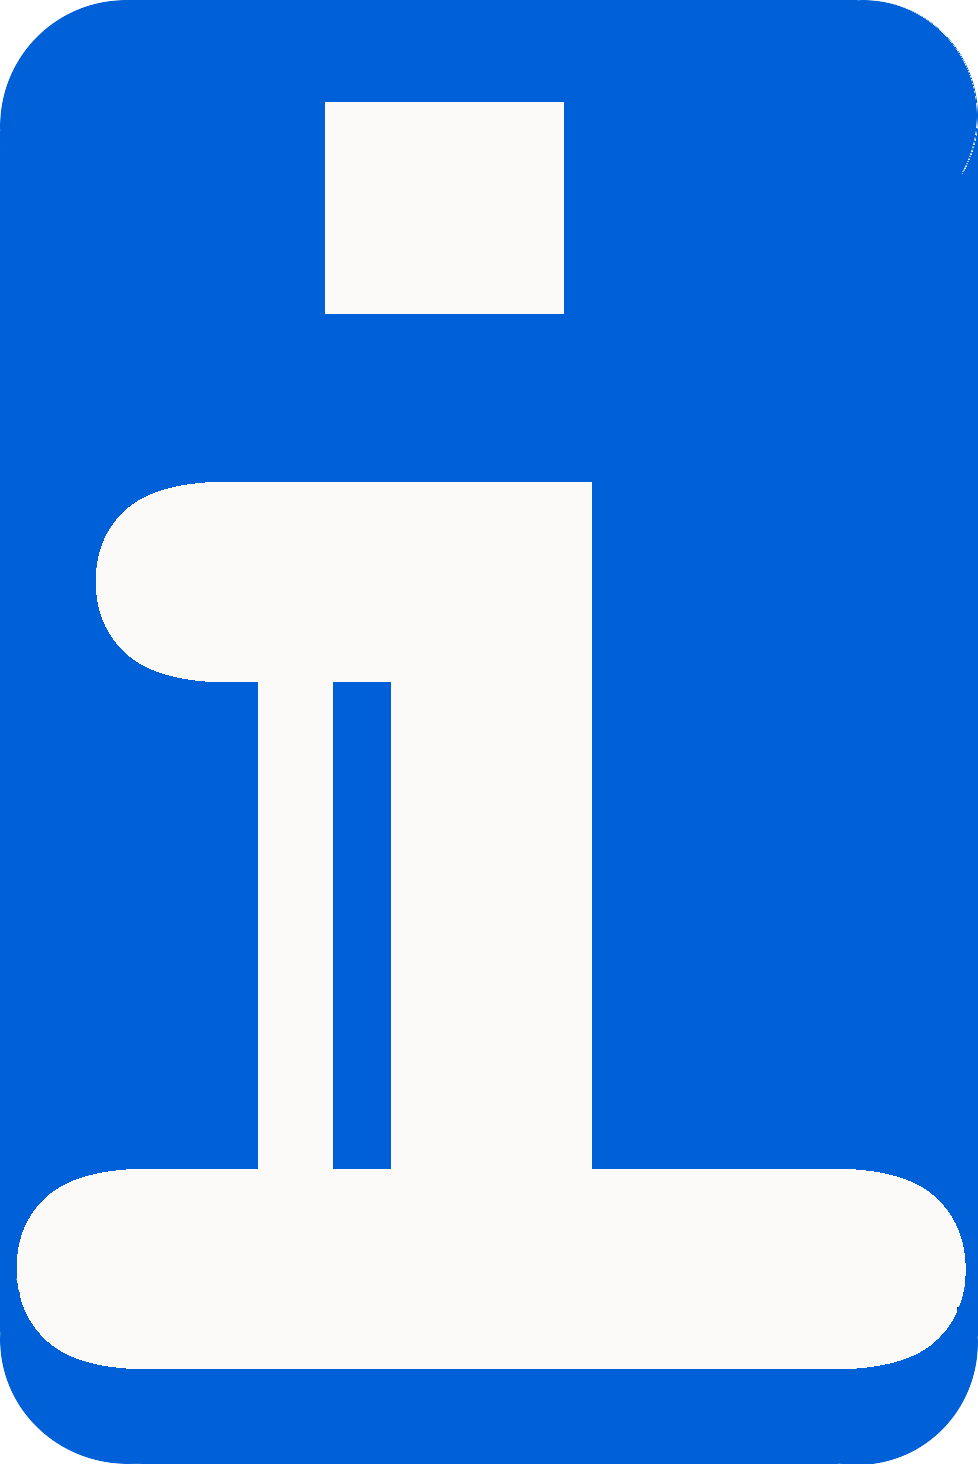 en:projects:infolab:logo_infolab_blau_rund.png